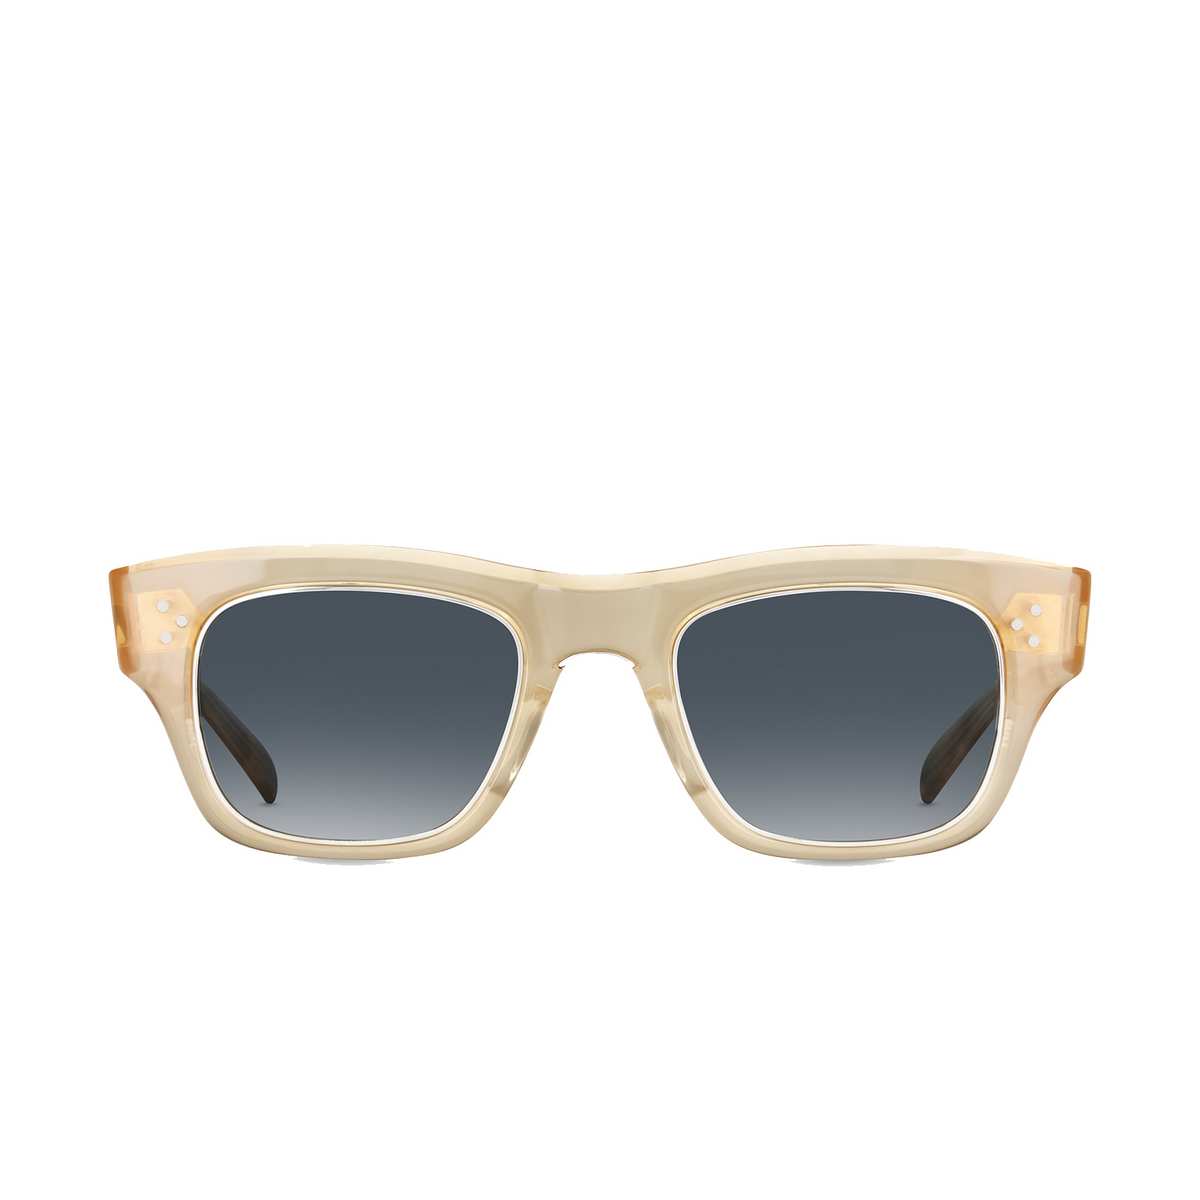 Mr. Leight® Square Sunglasses: Go S color Smt-plt/ocnglss - front view.